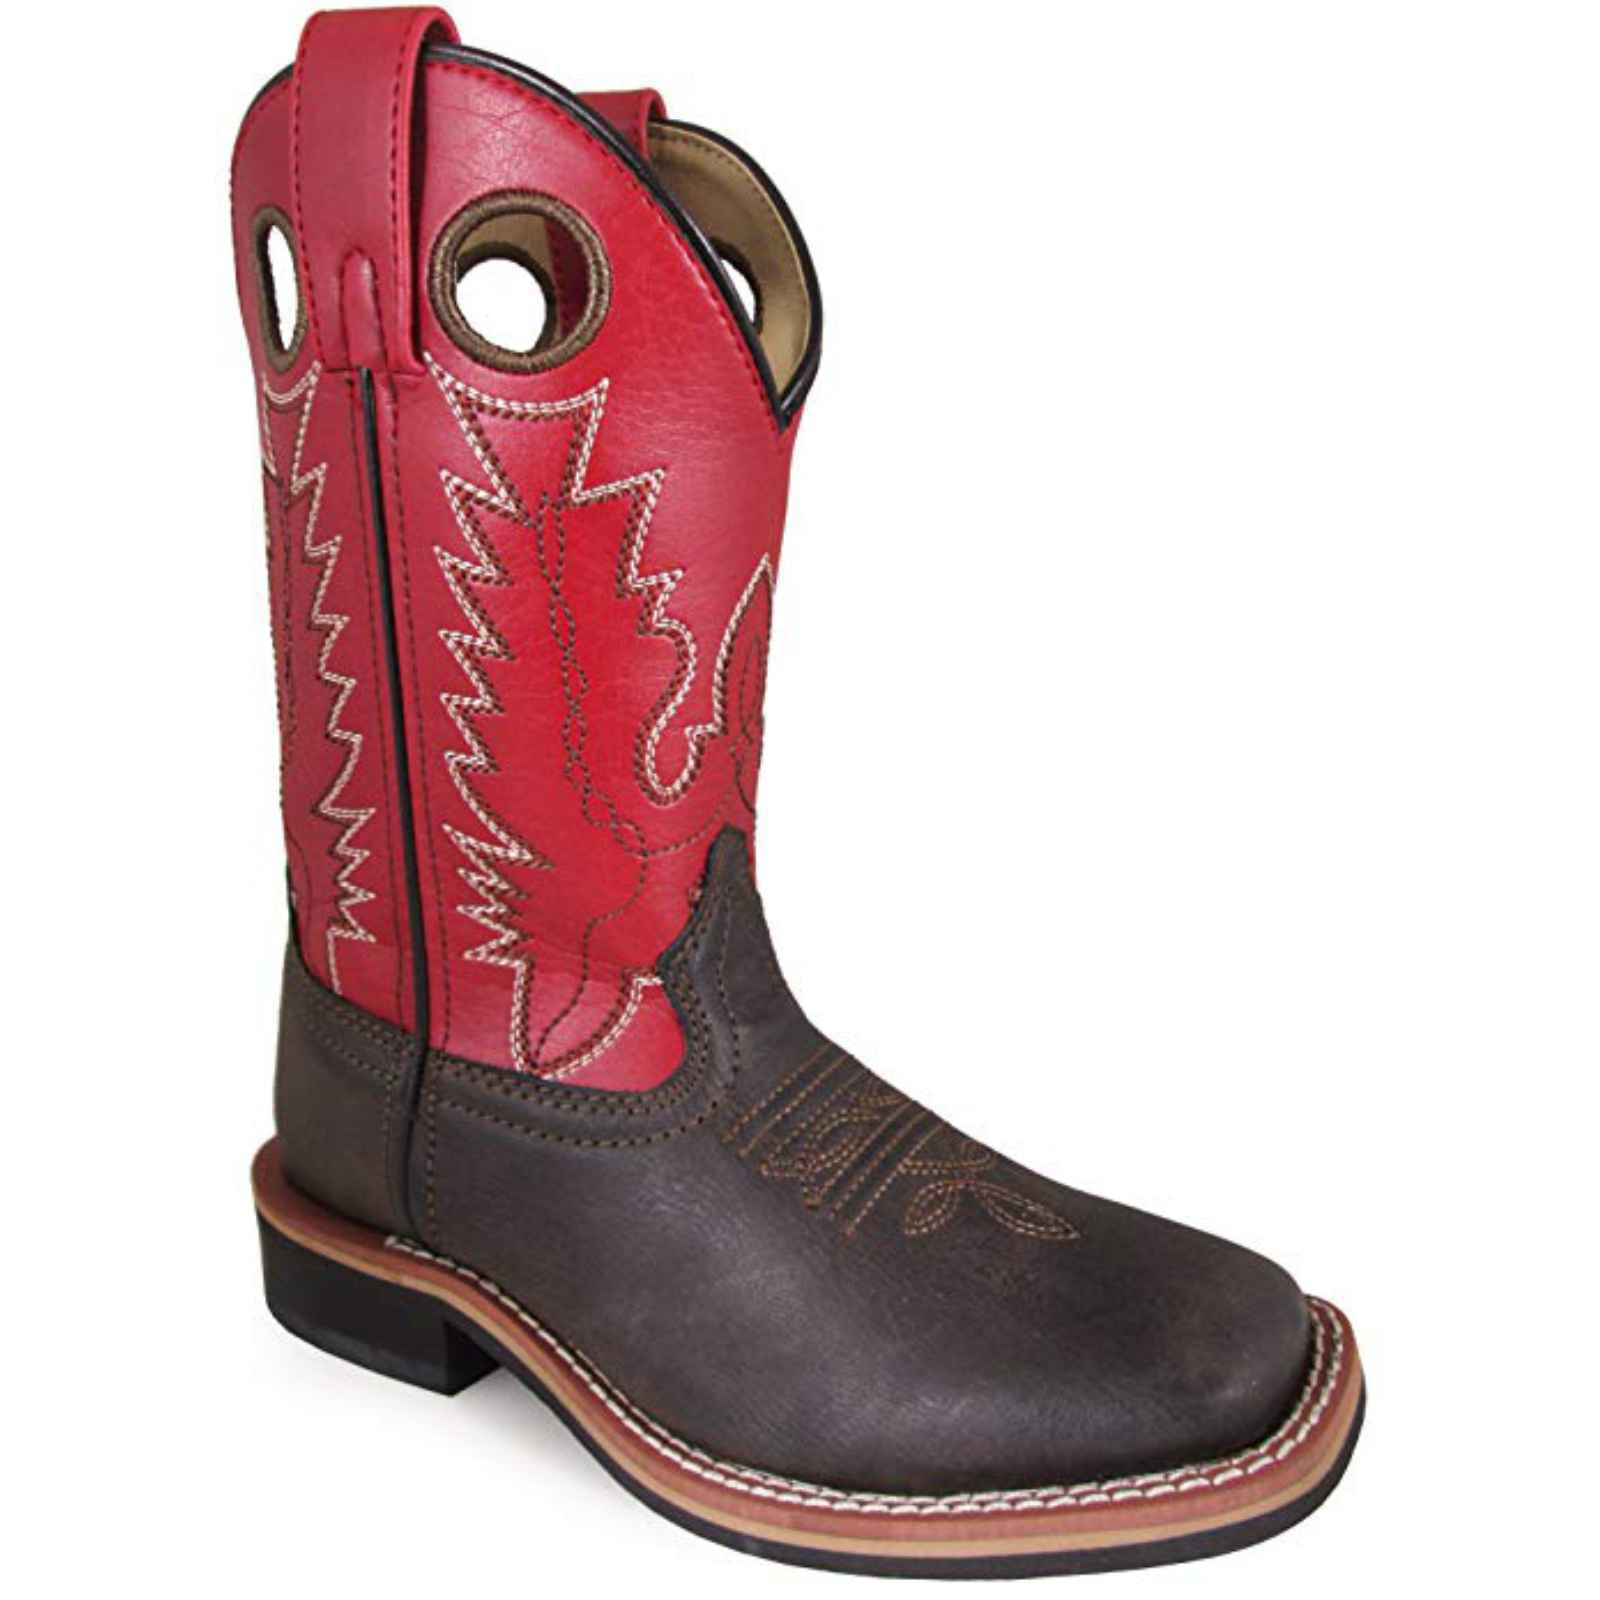 Smoky Mountain Youth Boys Buffalo Brown/Black Leather Cowboy Boots 